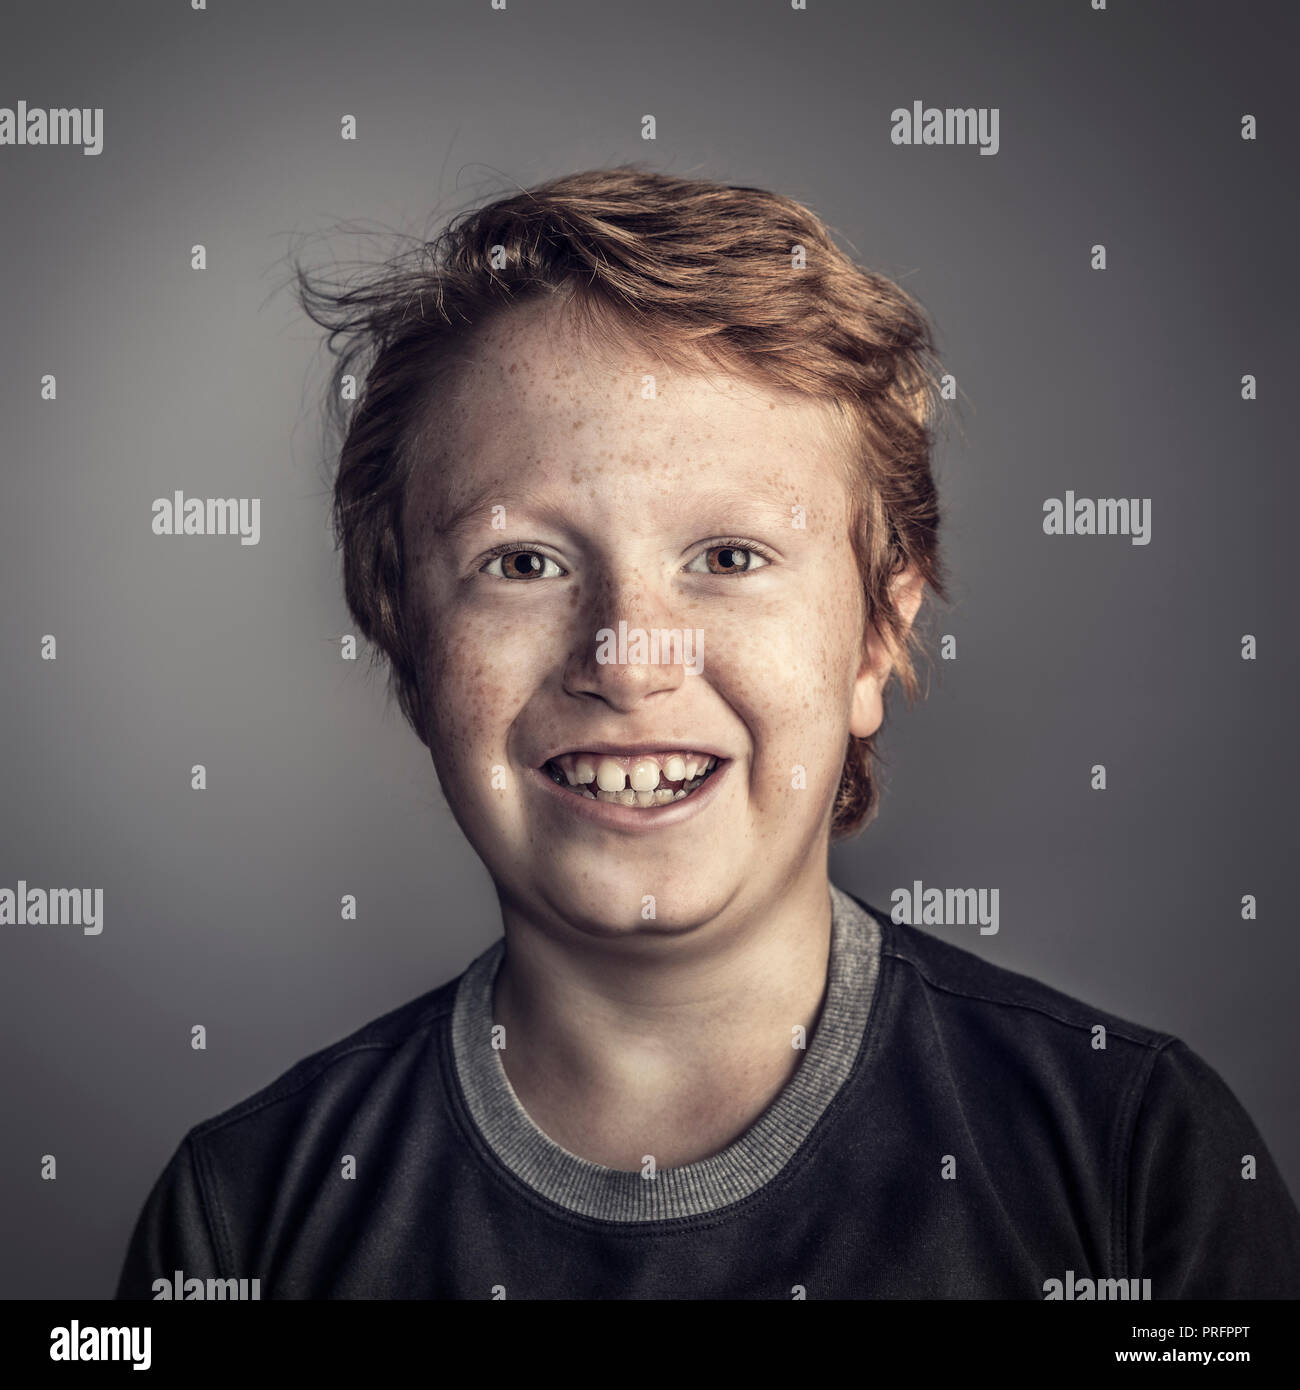 smiling young boy studio portrait Stock Photo